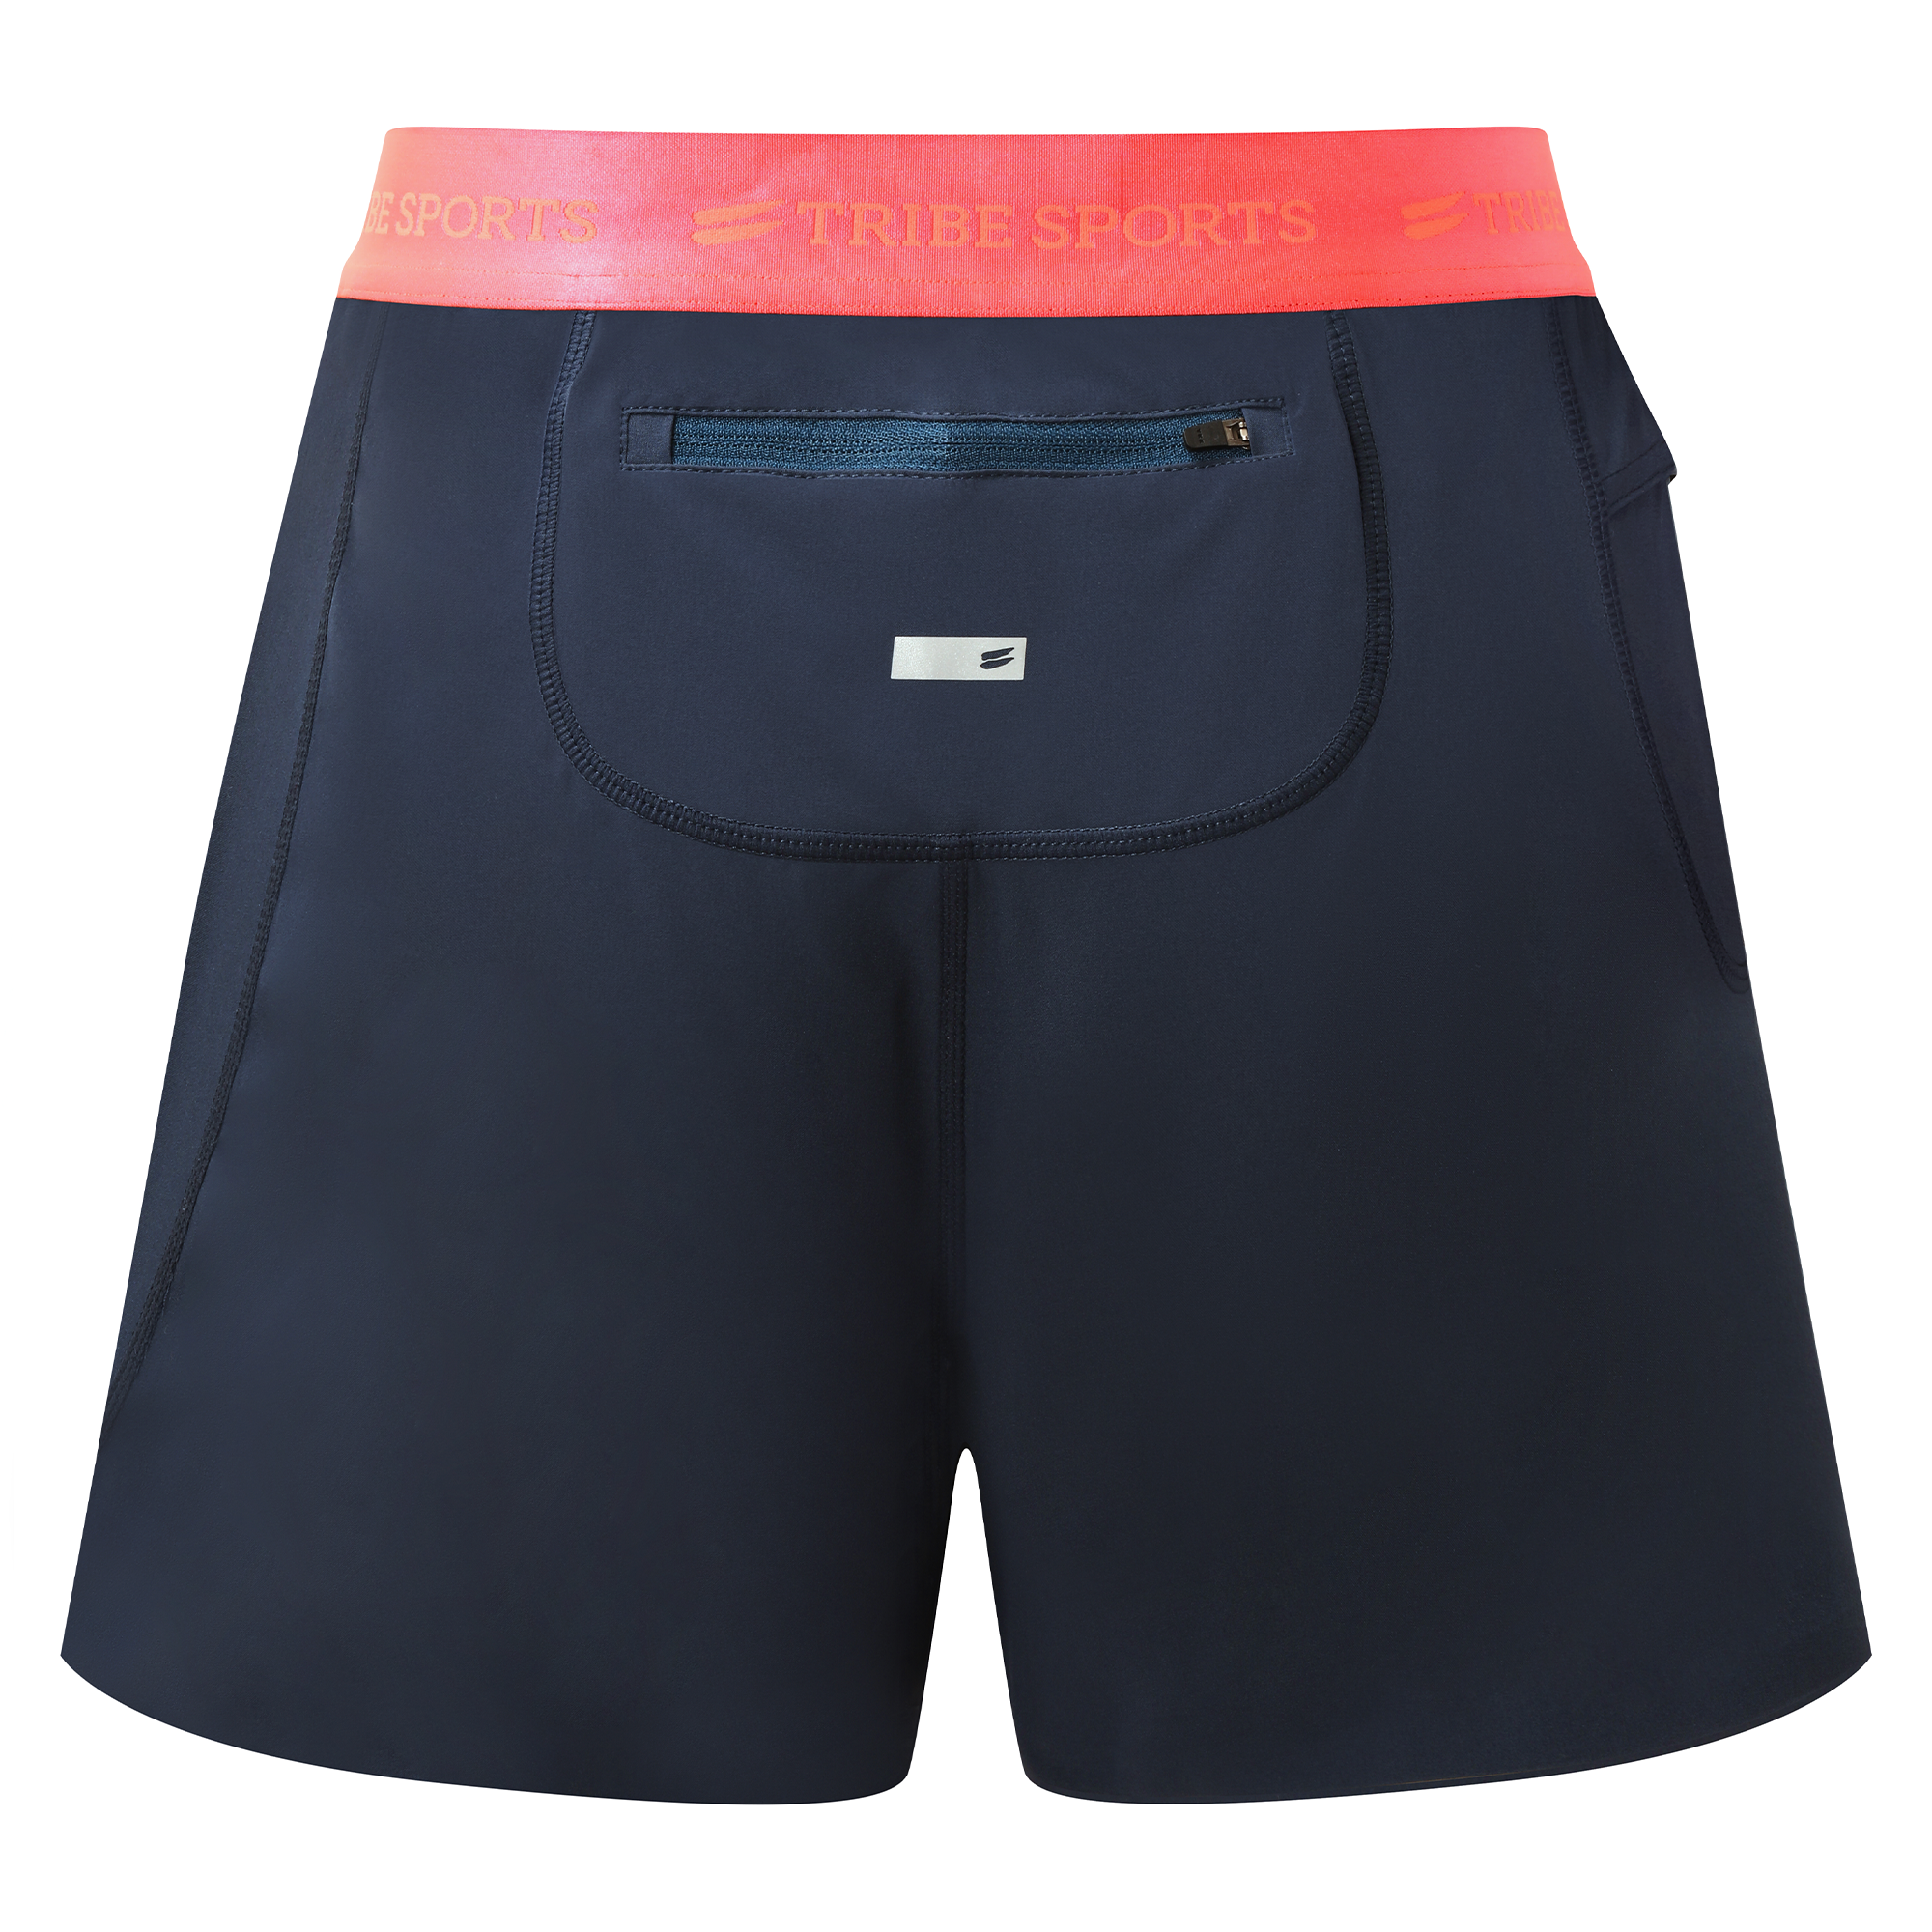 Endure Swift Shorts - Sports Tribe - Navy/Charcoal